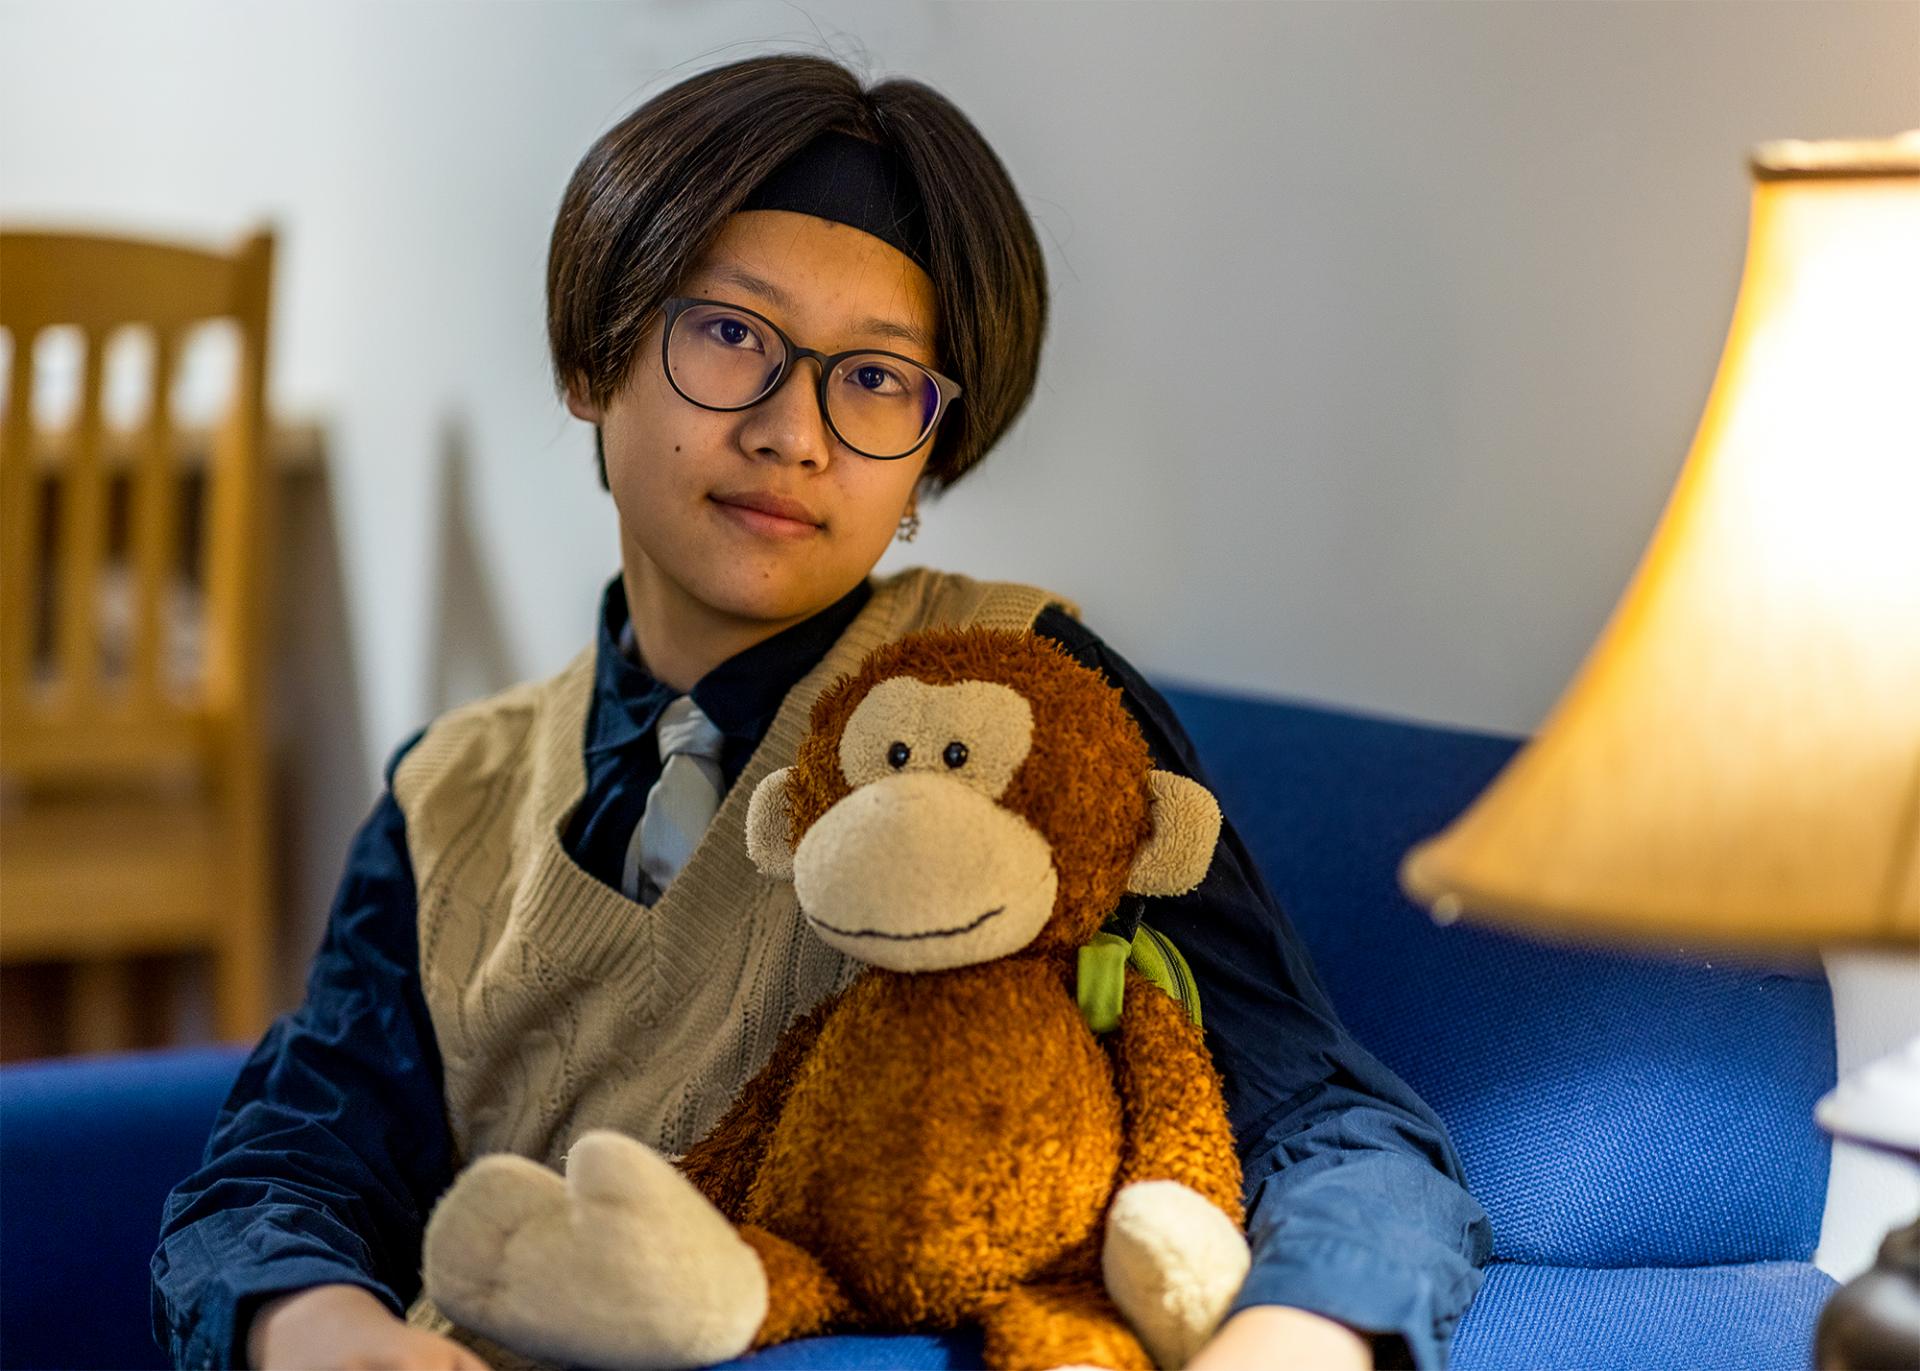 A photo of Cici Nie with a stuffed monkey